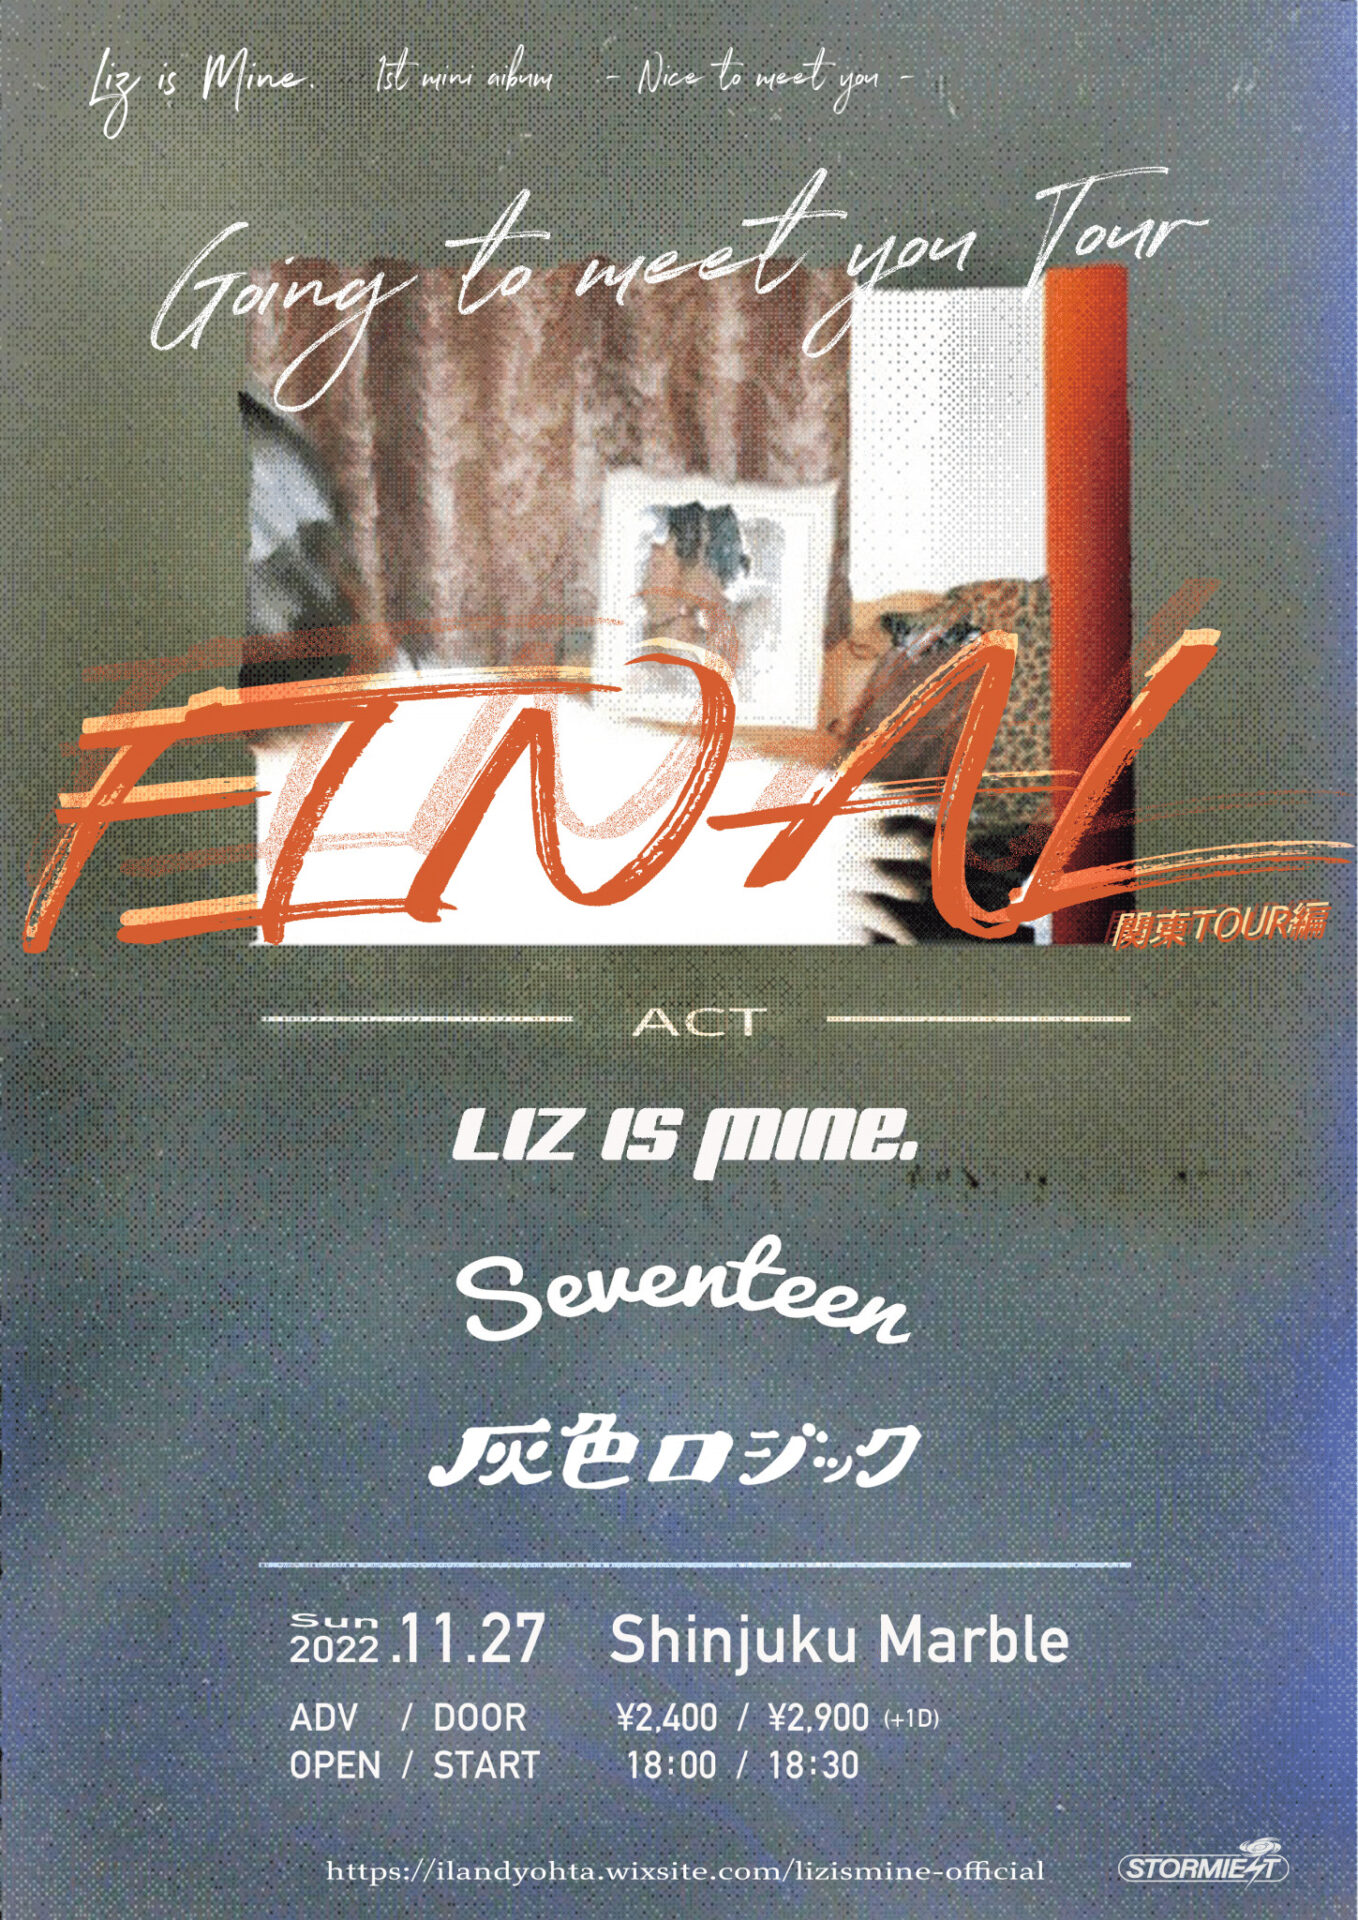 Liz is Mine. "Going to meet you Tour" × STORMIEST 1st LABEL TOUR [関東編TOUR FINAL]